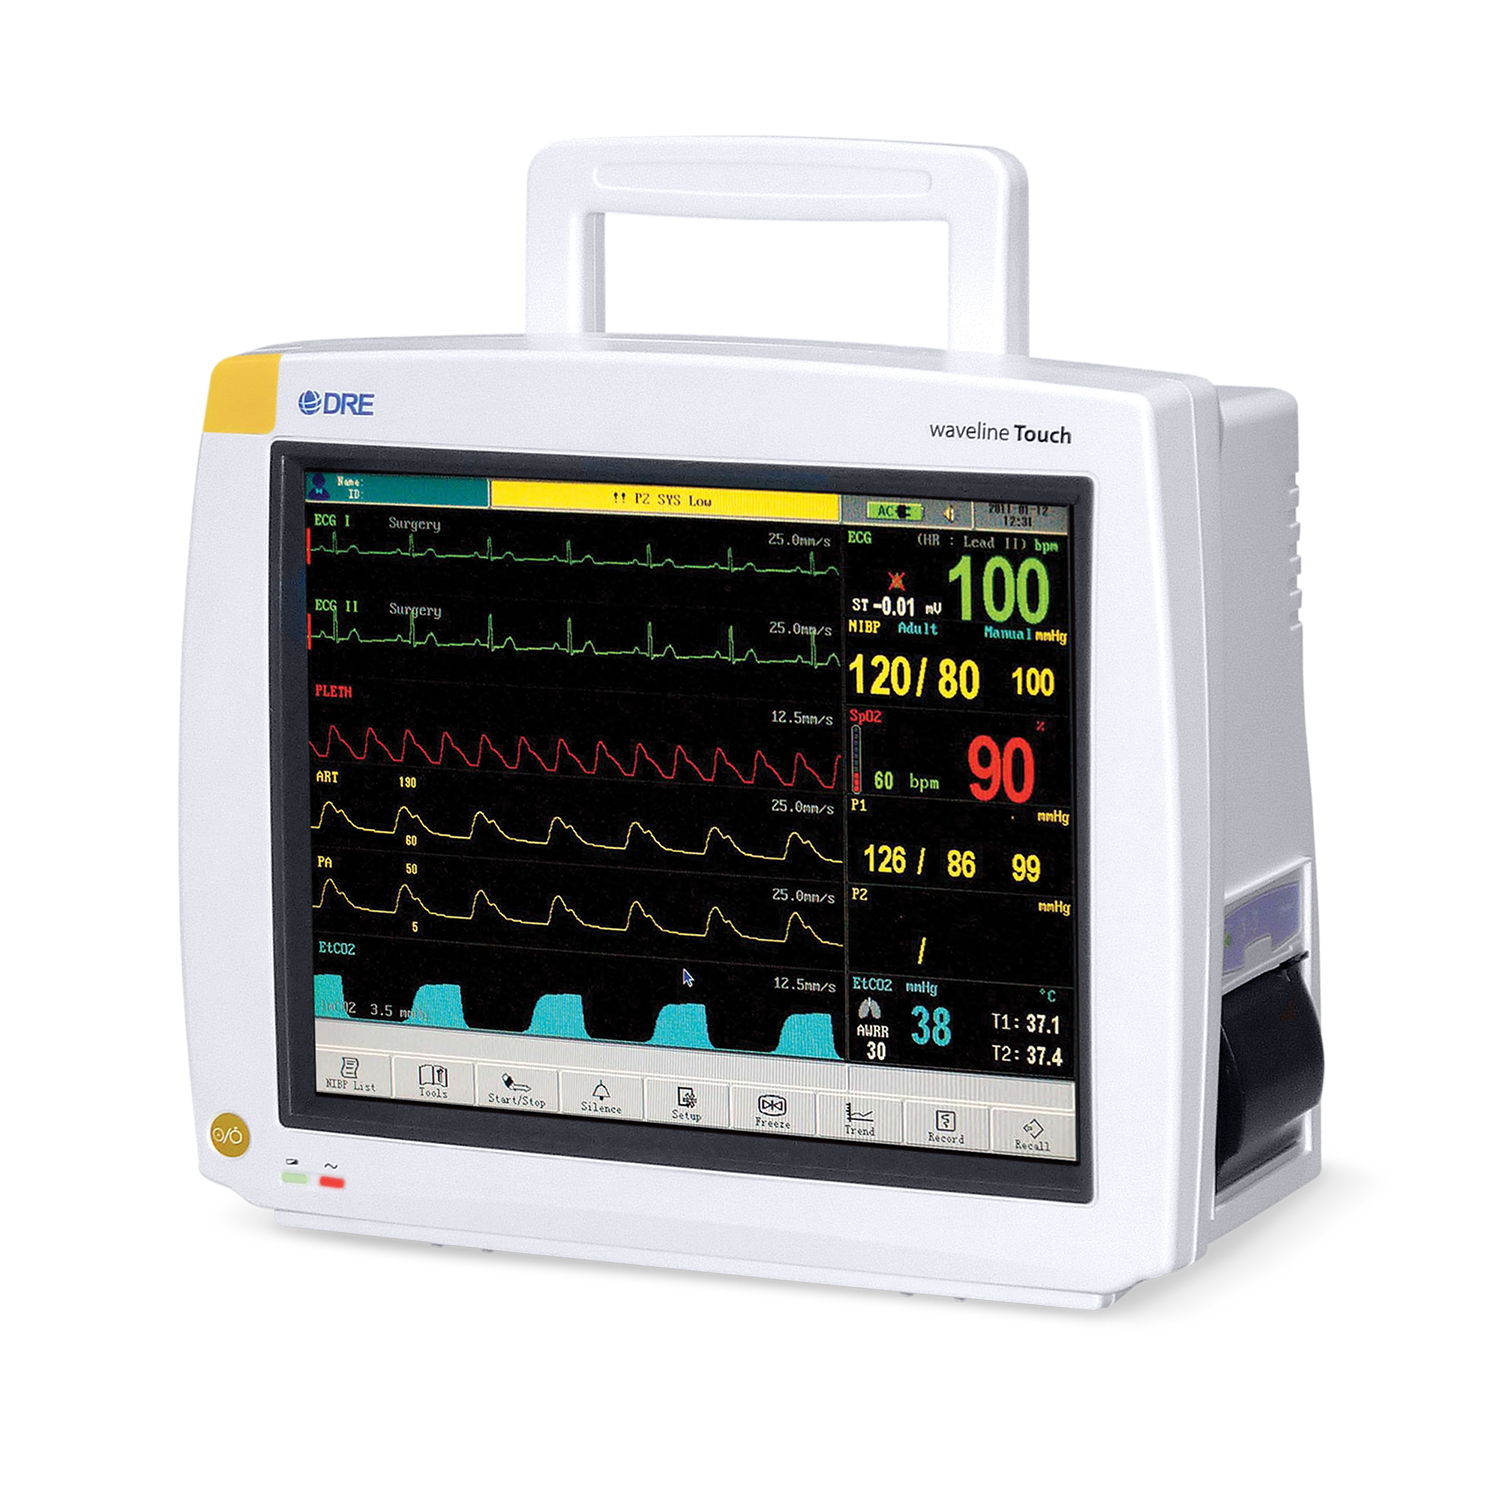 DRE Waveline Touch Patient Monitor